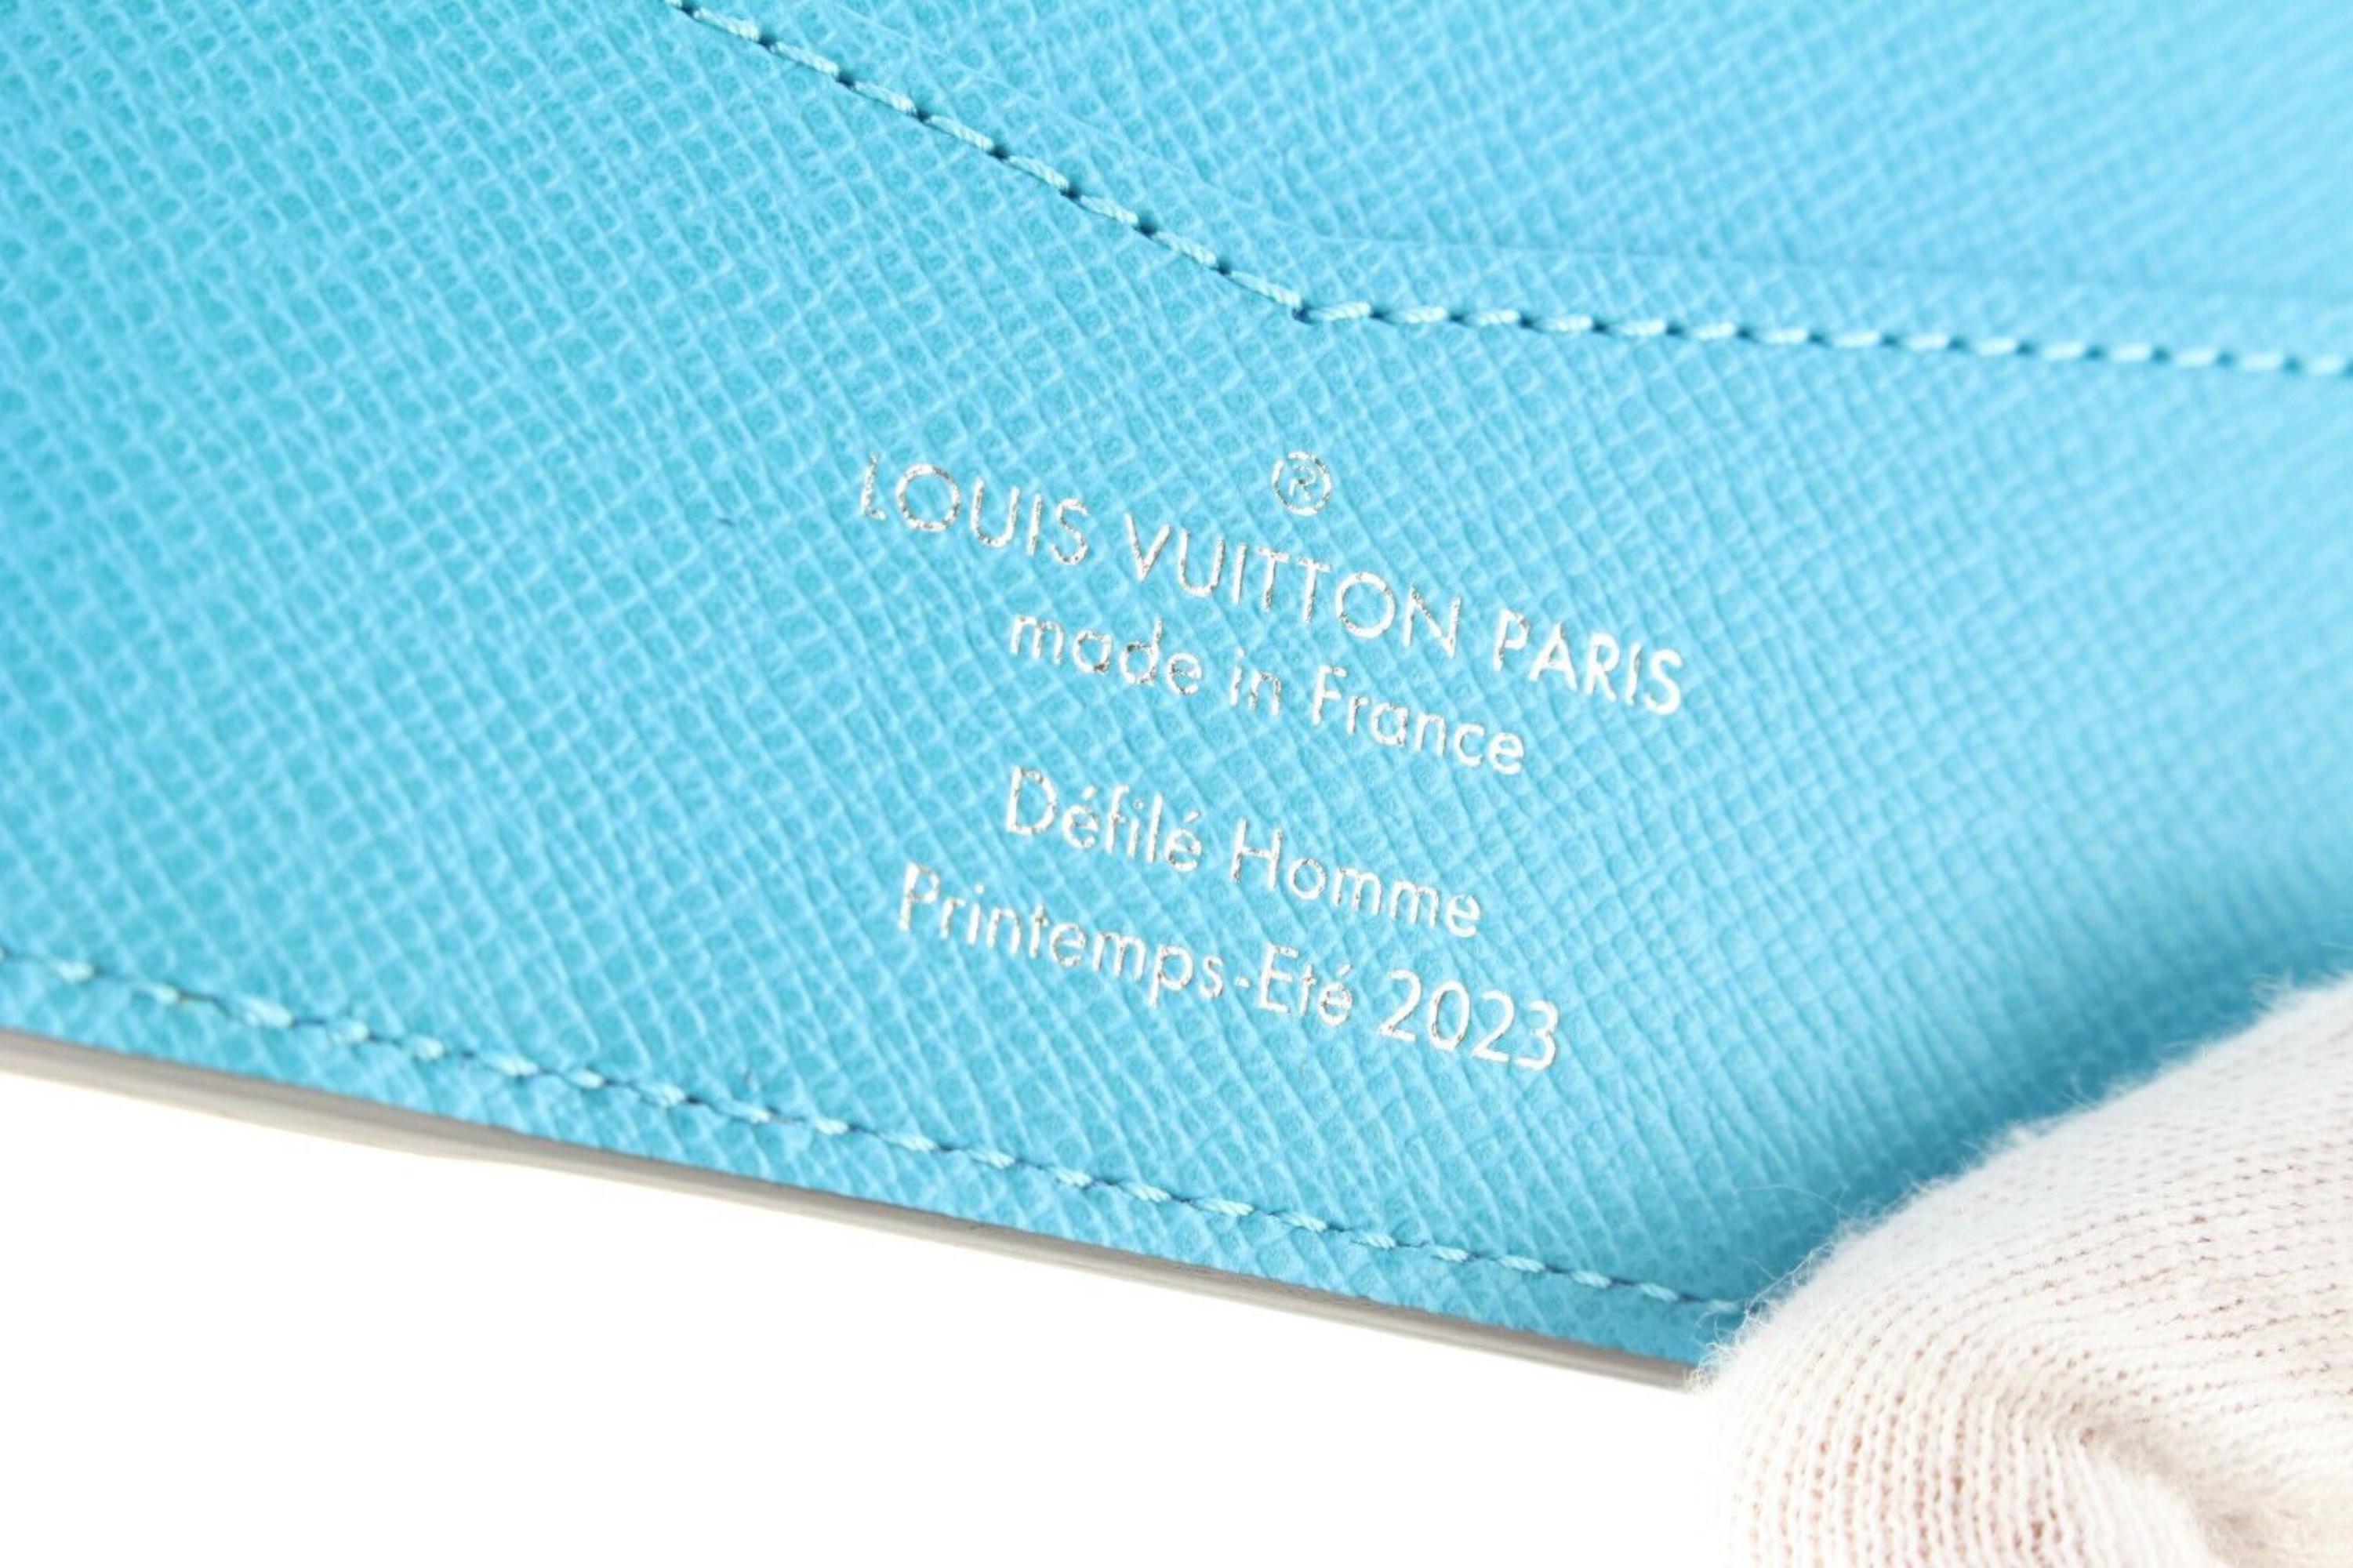 Louis Vuitton Slender Mens Wallet - 12 For Sale on 1stDibs